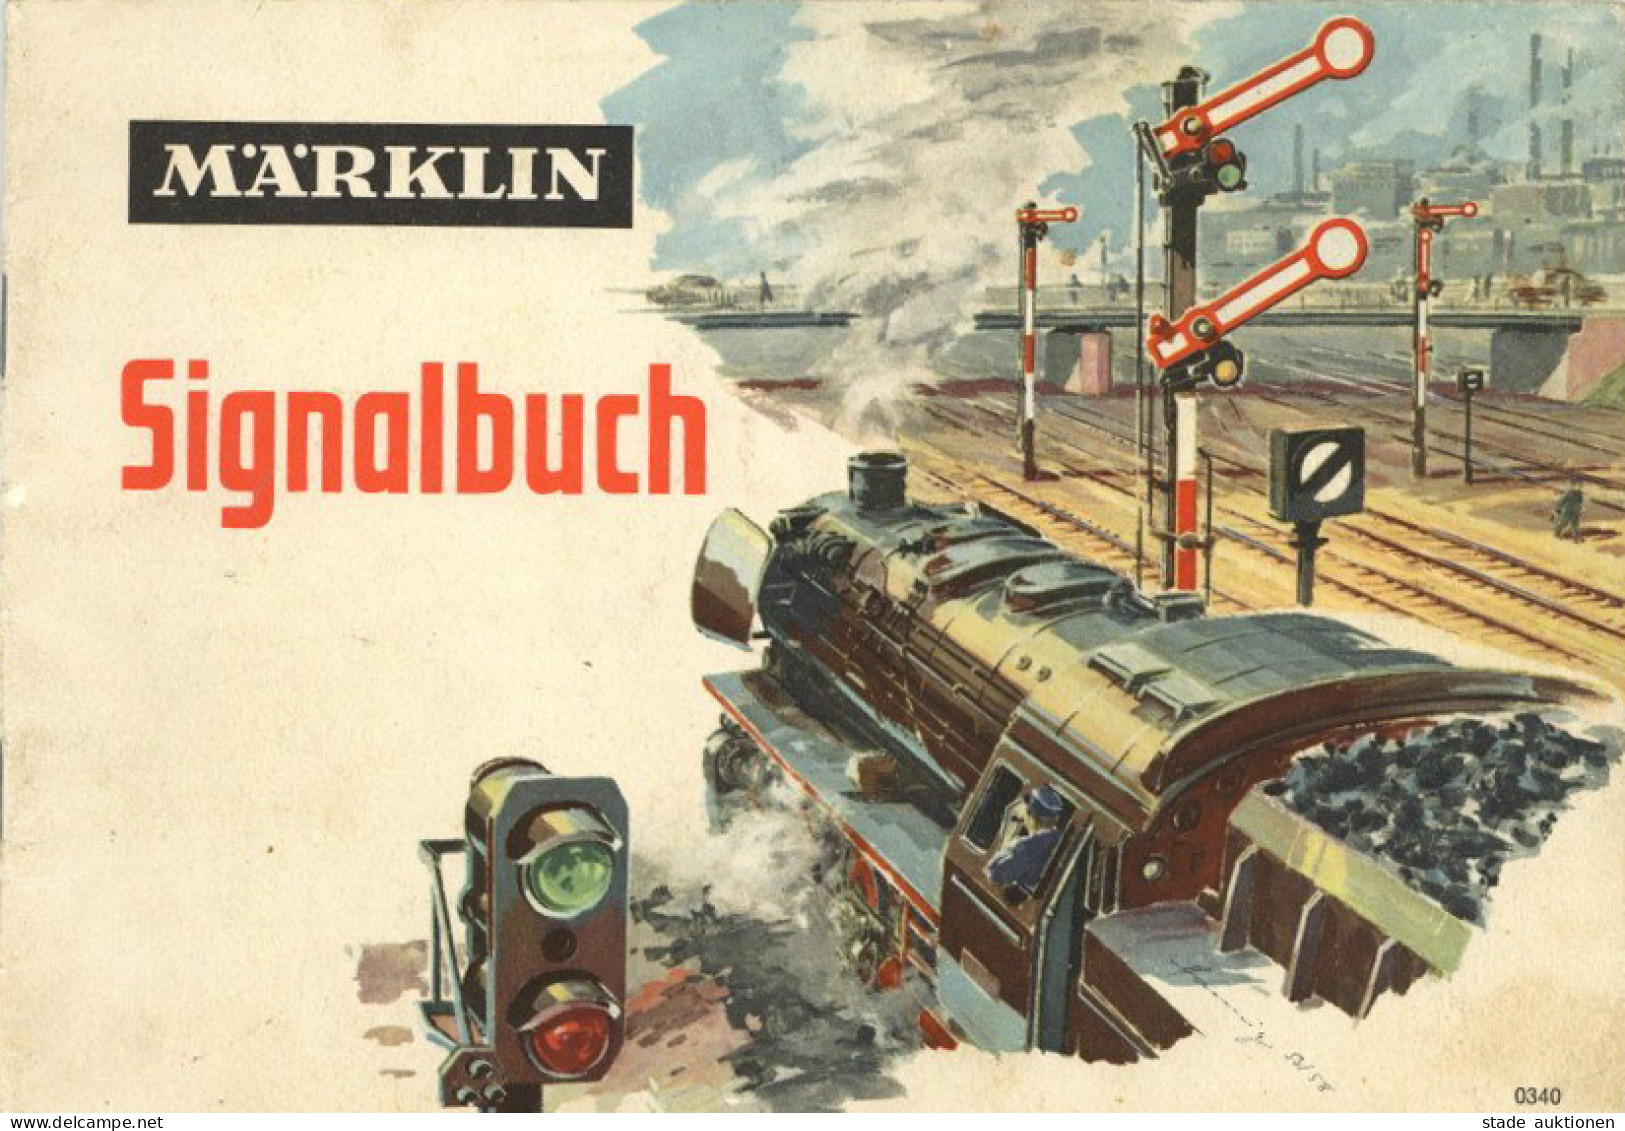 Eisenbahn Märklin Signalbuch 0340, 40 S. I-II Chemin De Fer - Trains